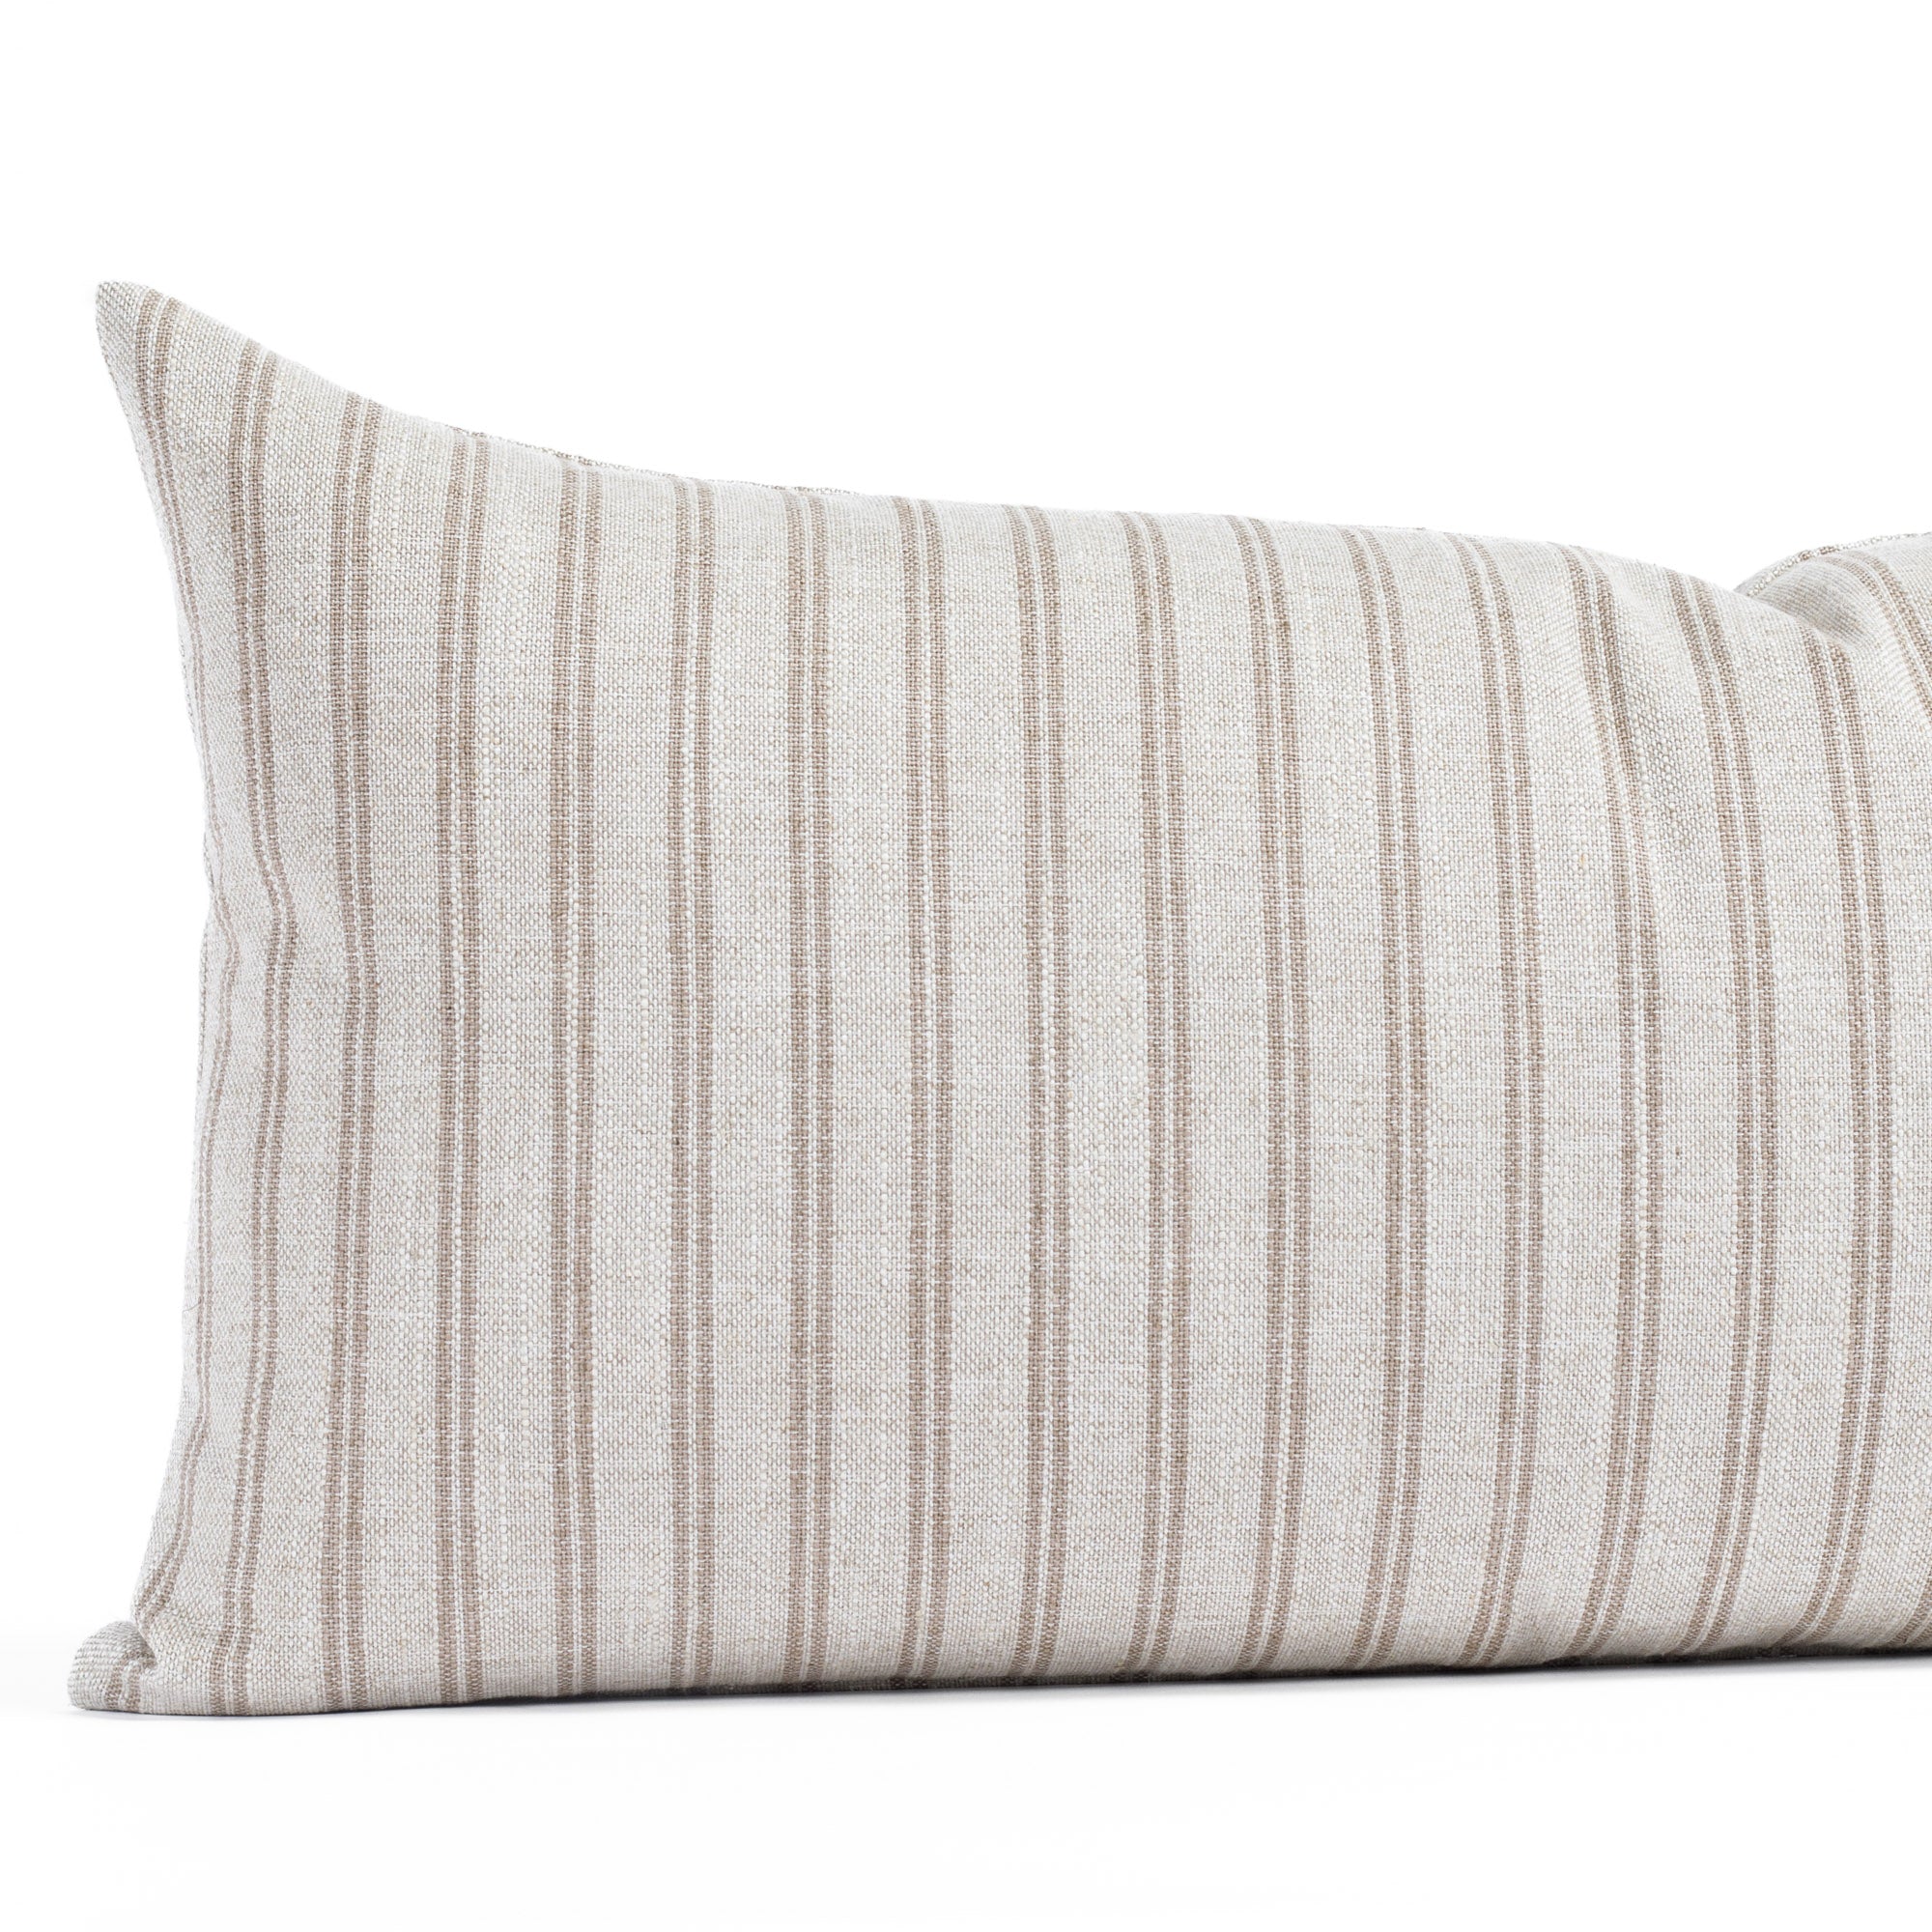 a cream and brown stripe extra long lumbar pillow : close up view